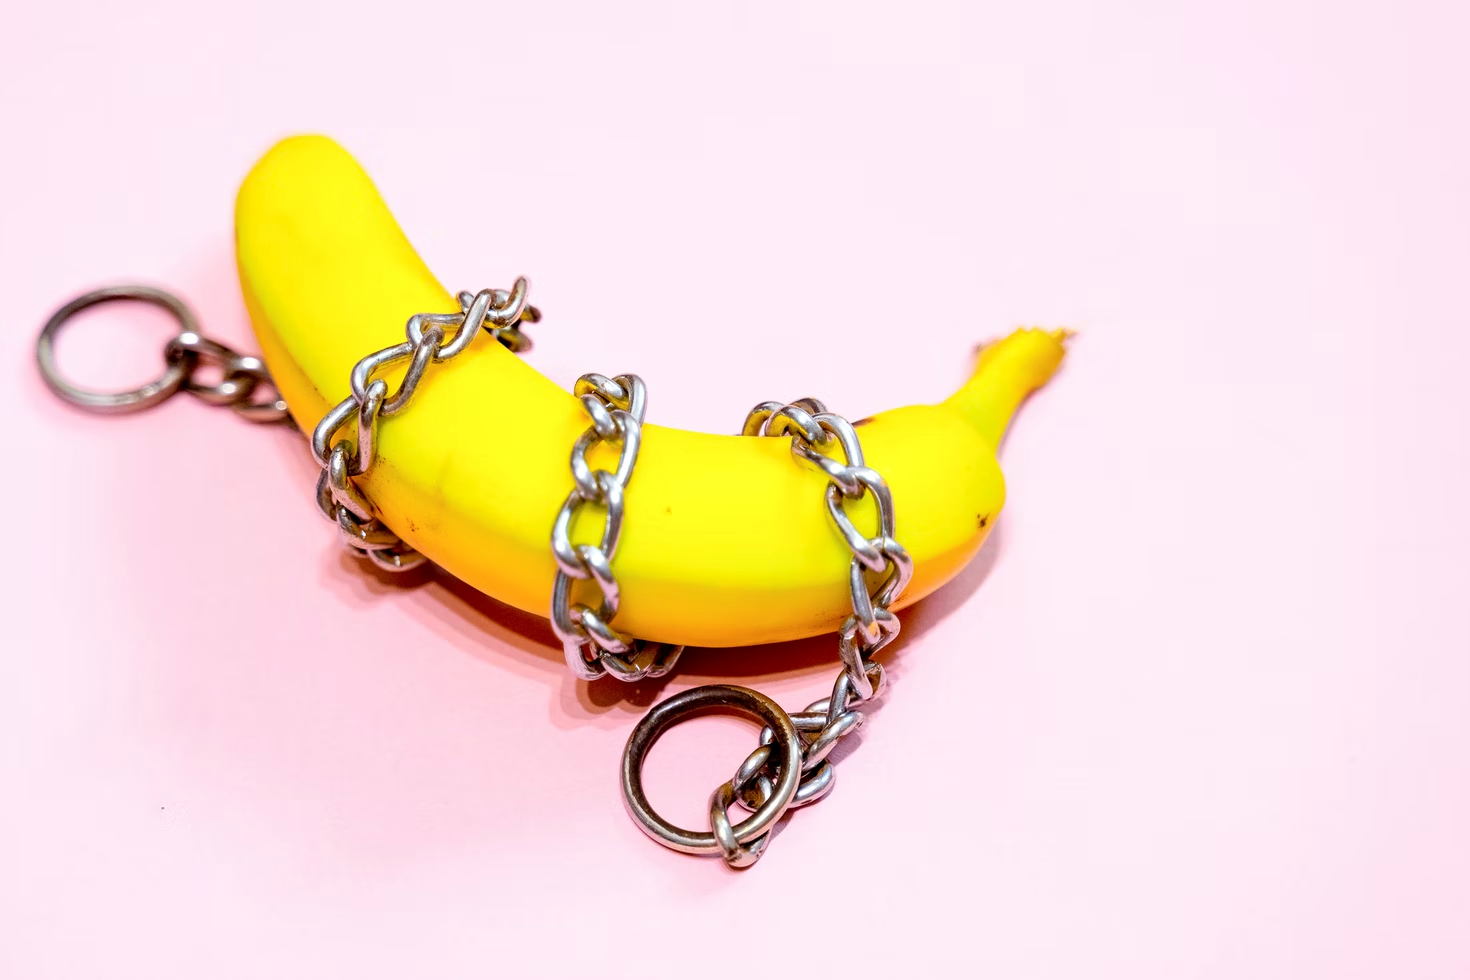 A metal chain wrapped around a banana